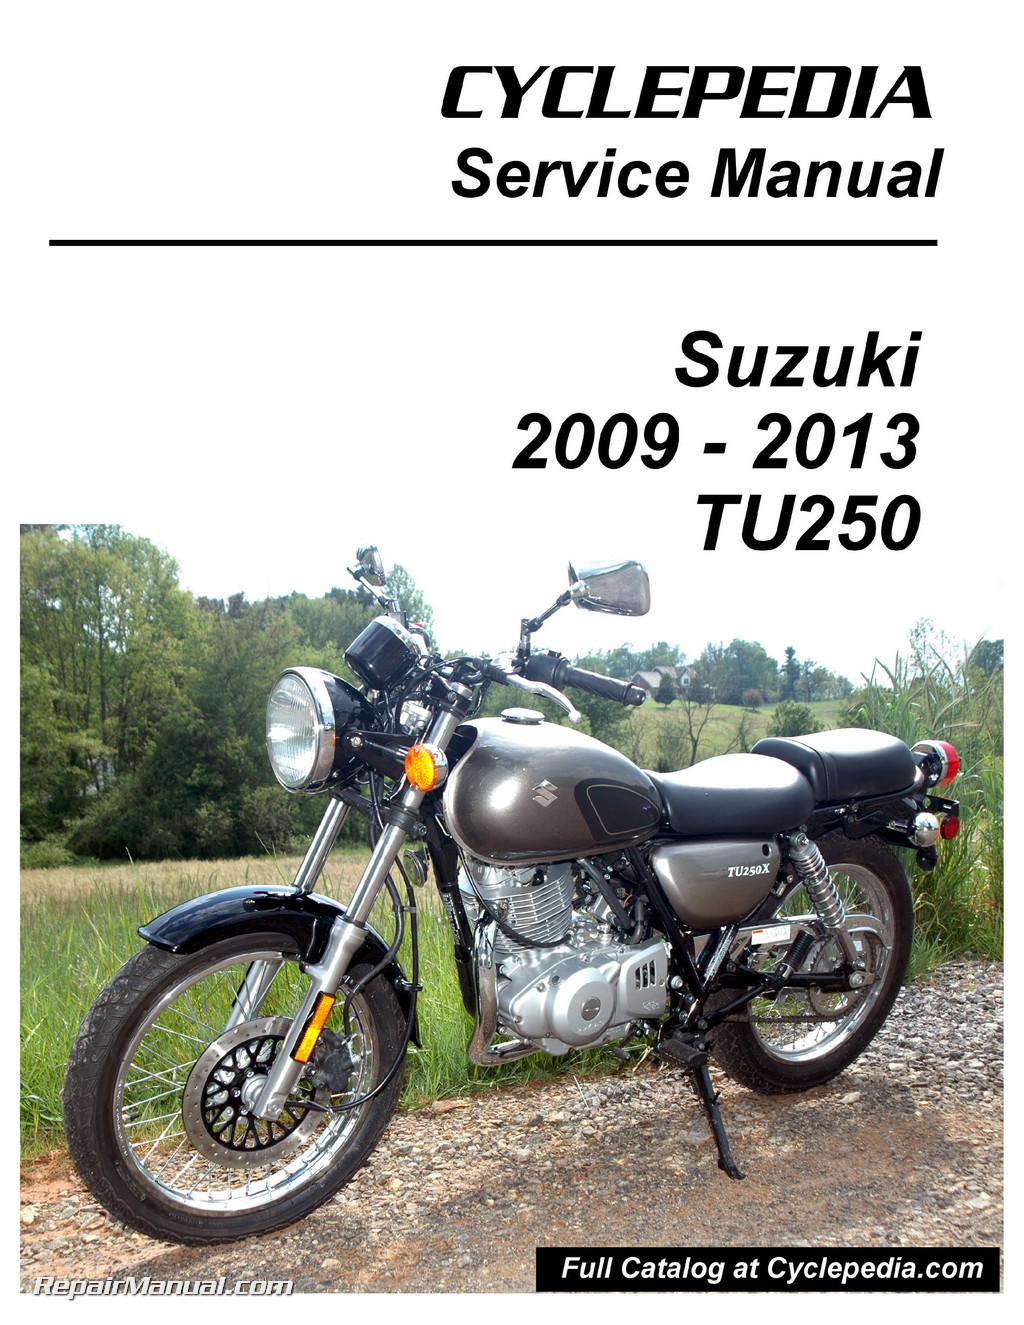 Suzuki Motorcycle Manuals Pdf Cleverce